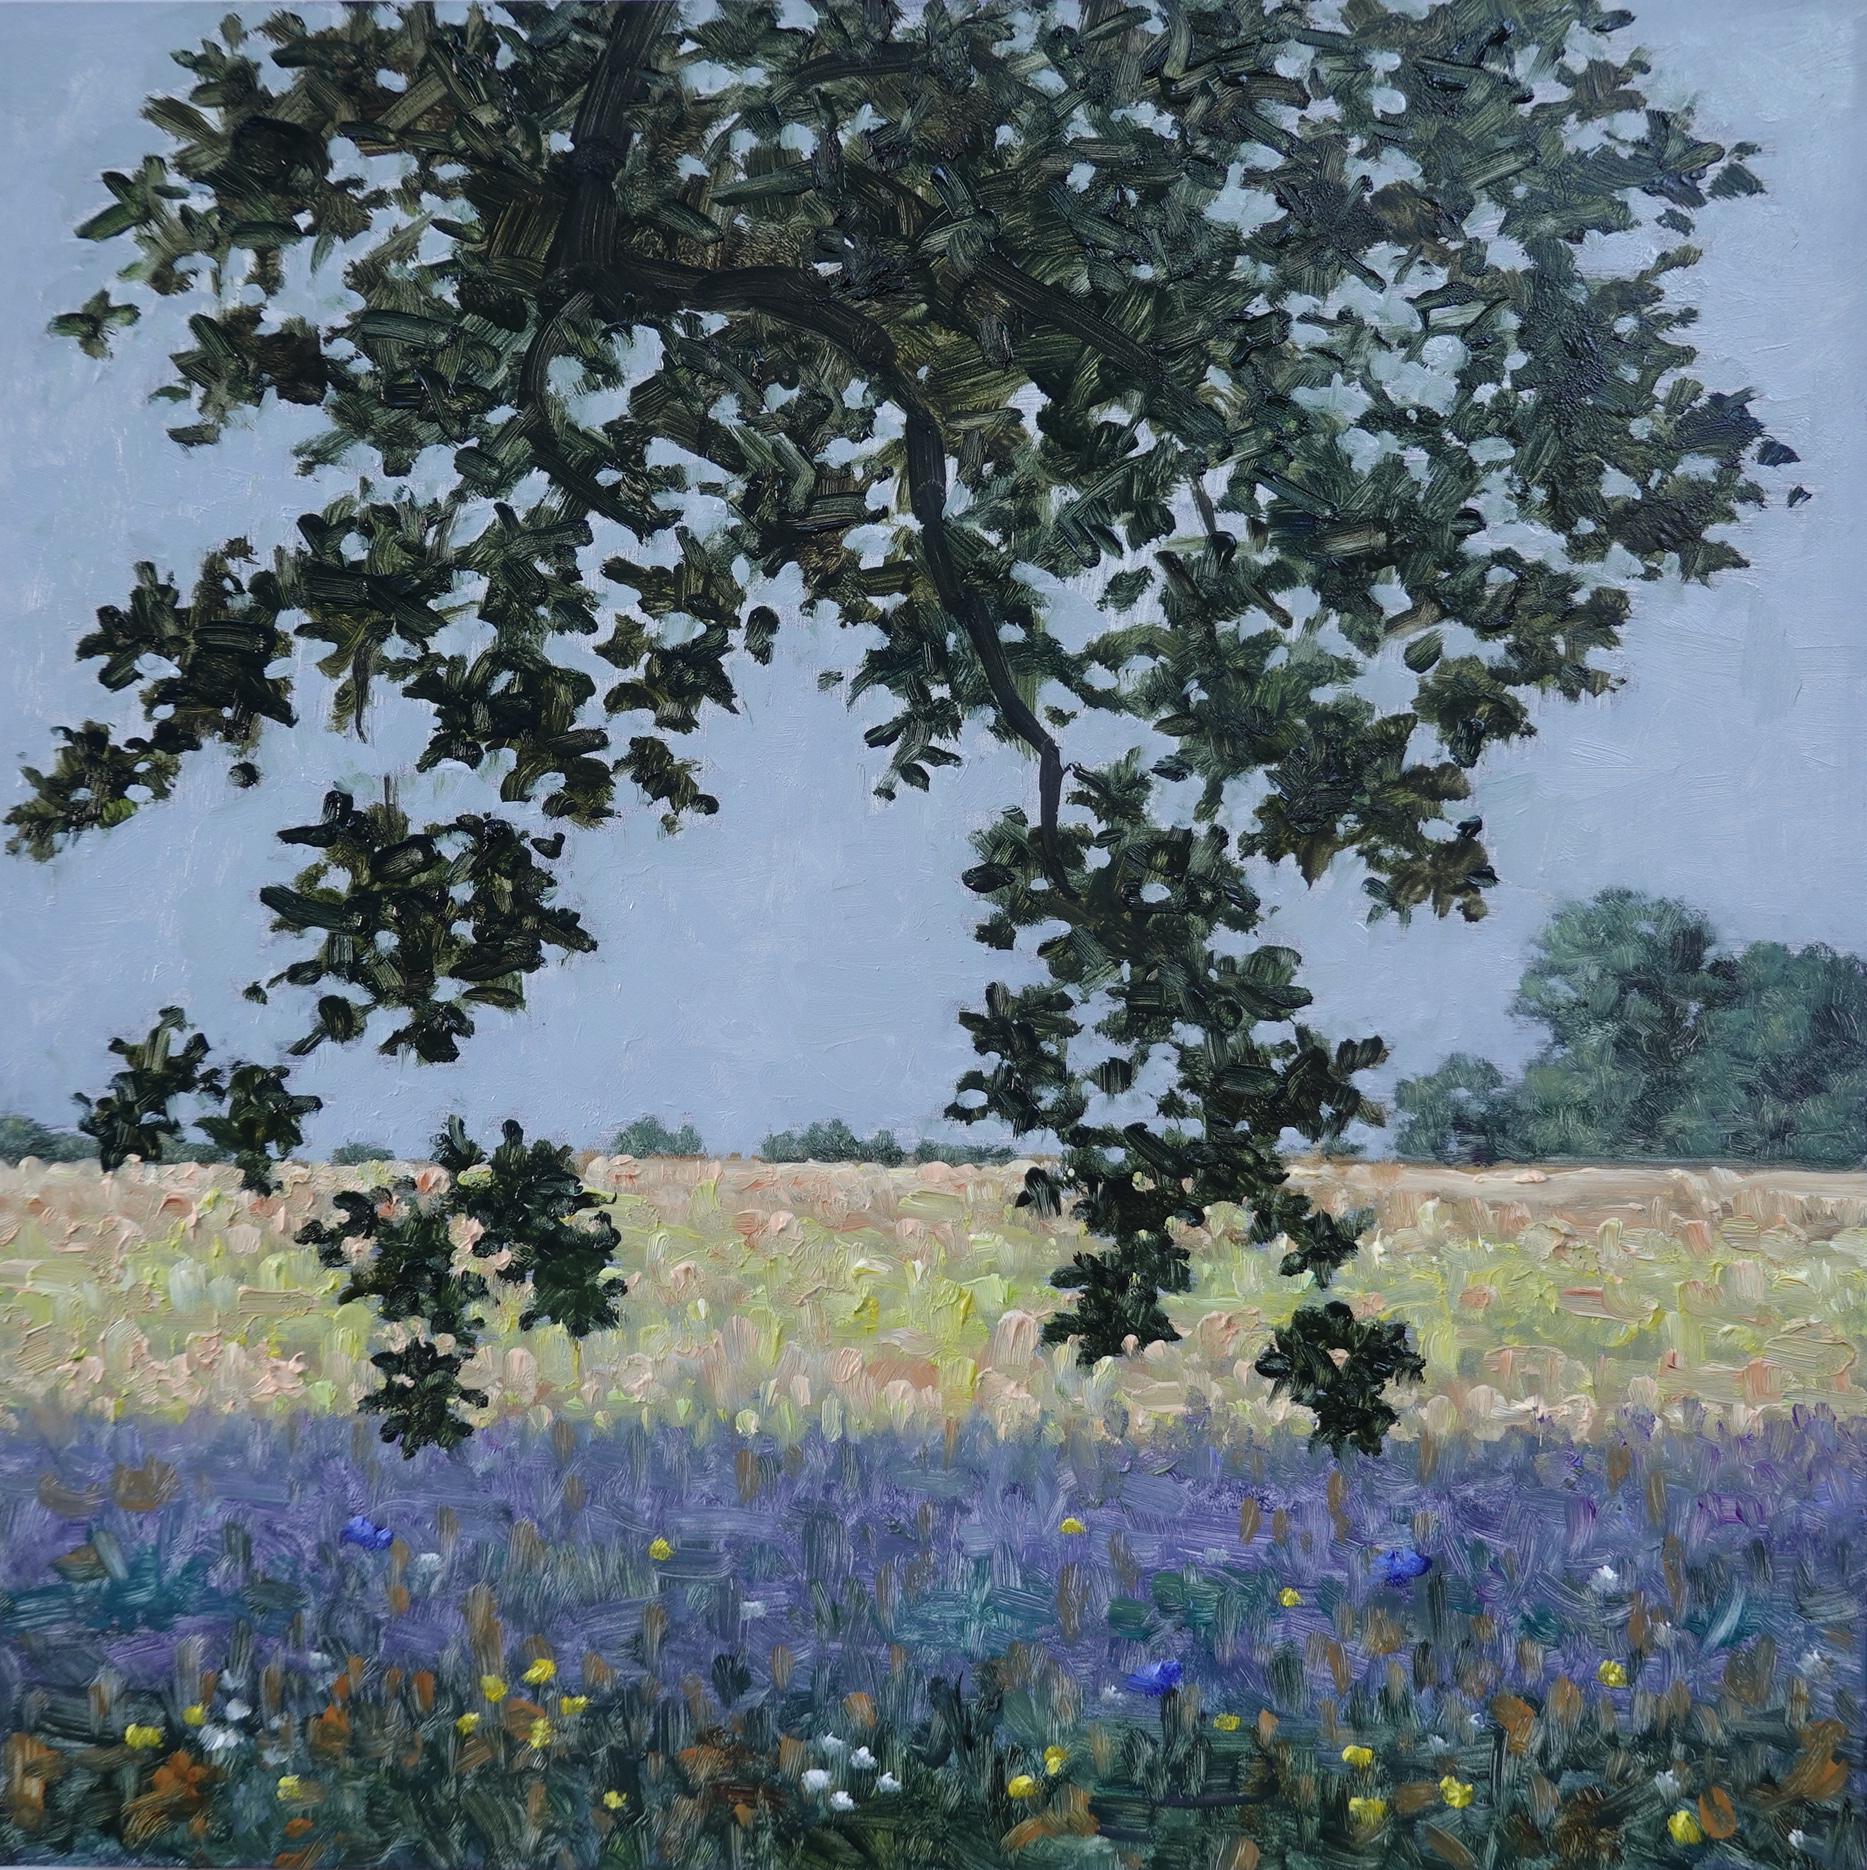 Thomas Sarrantonio Landscape Painting - Field Painting July 1 2022, Violet Blue Flowers, Golden Green Grass, Trees